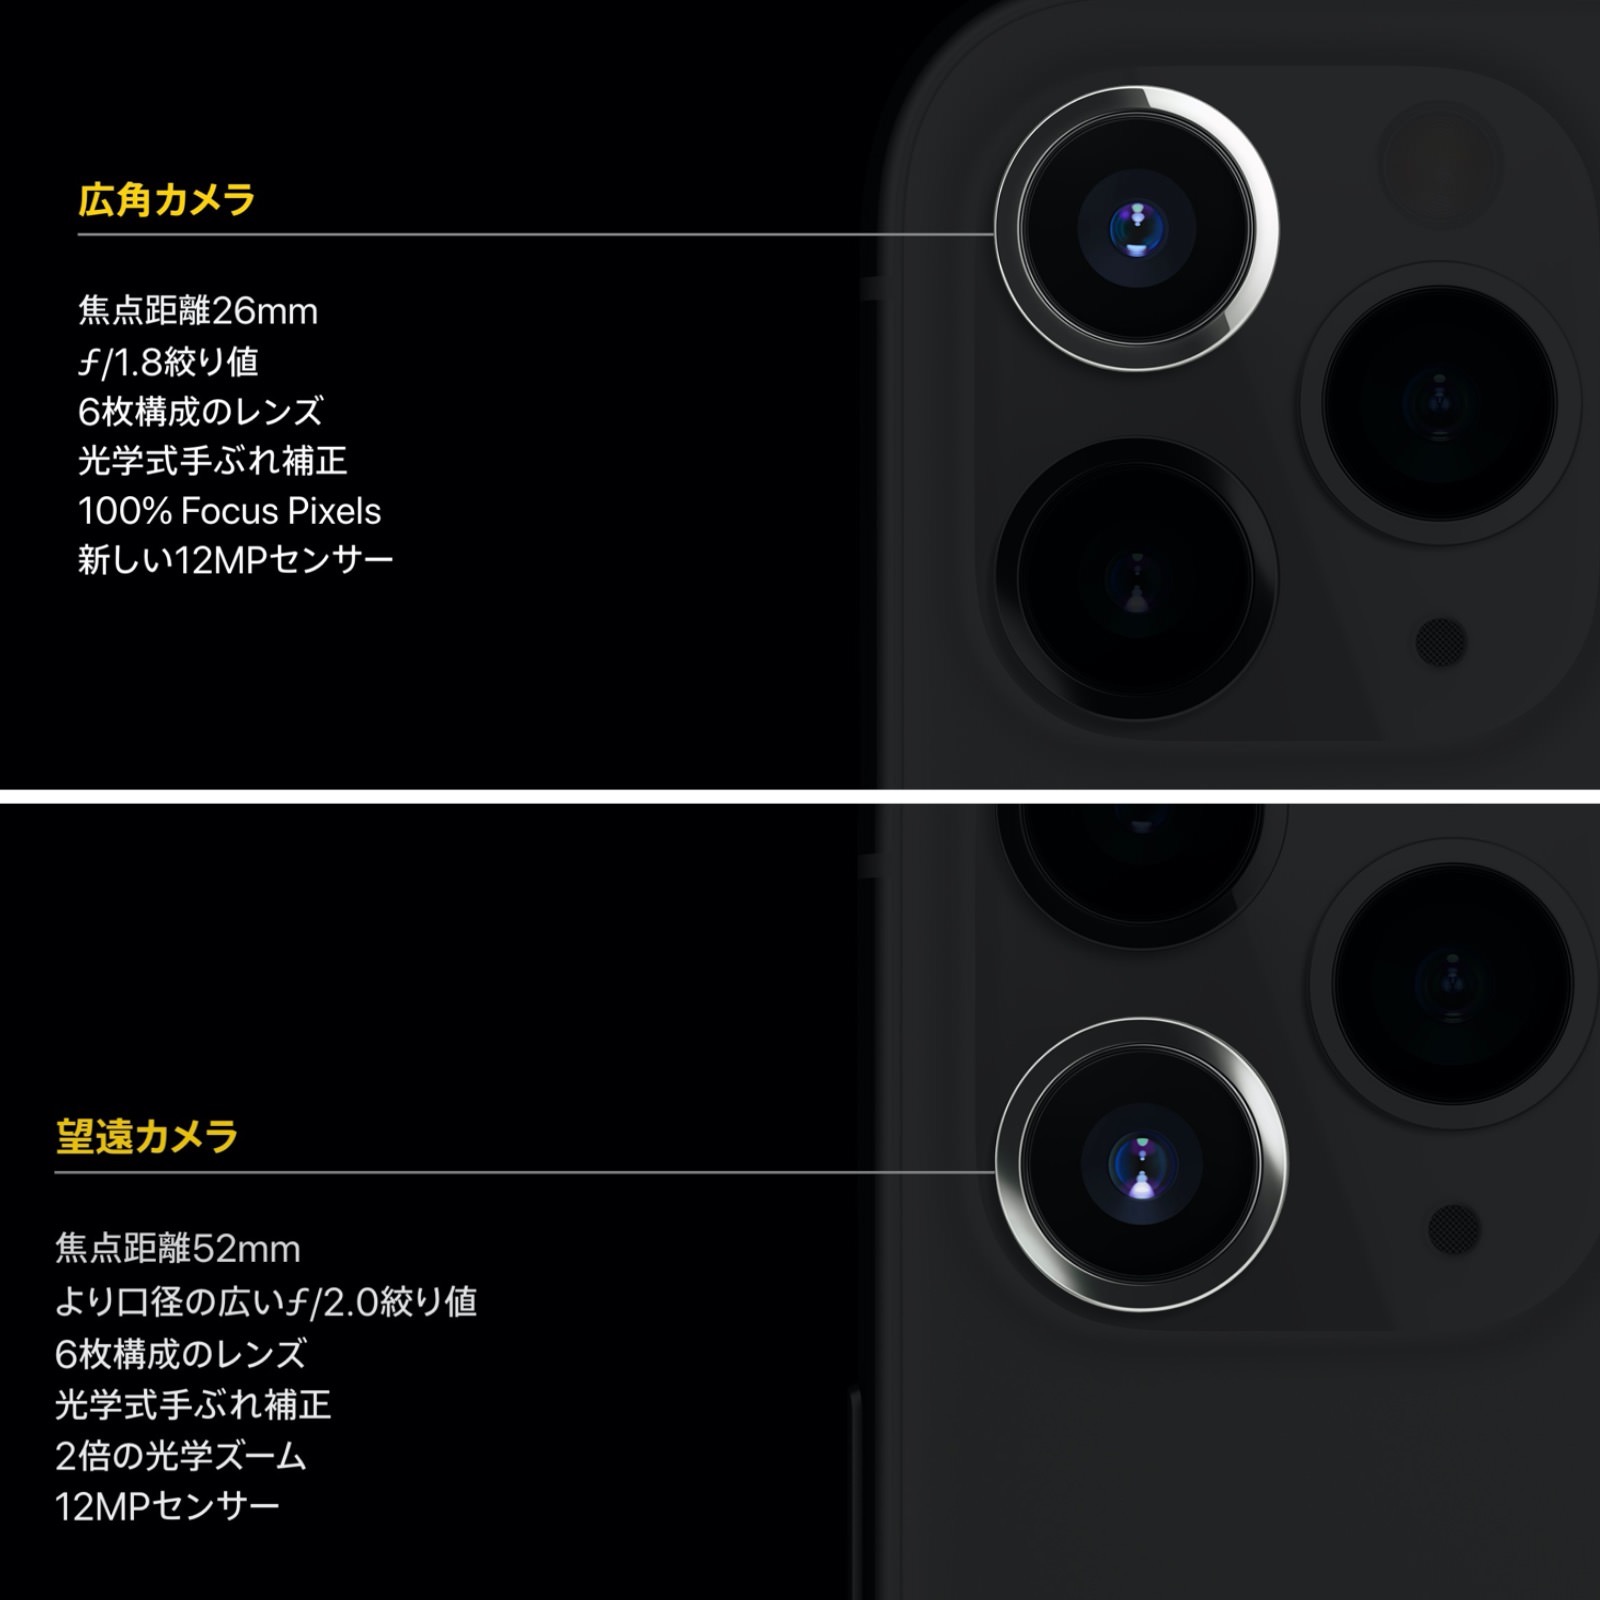 Iphone 11 pro camera